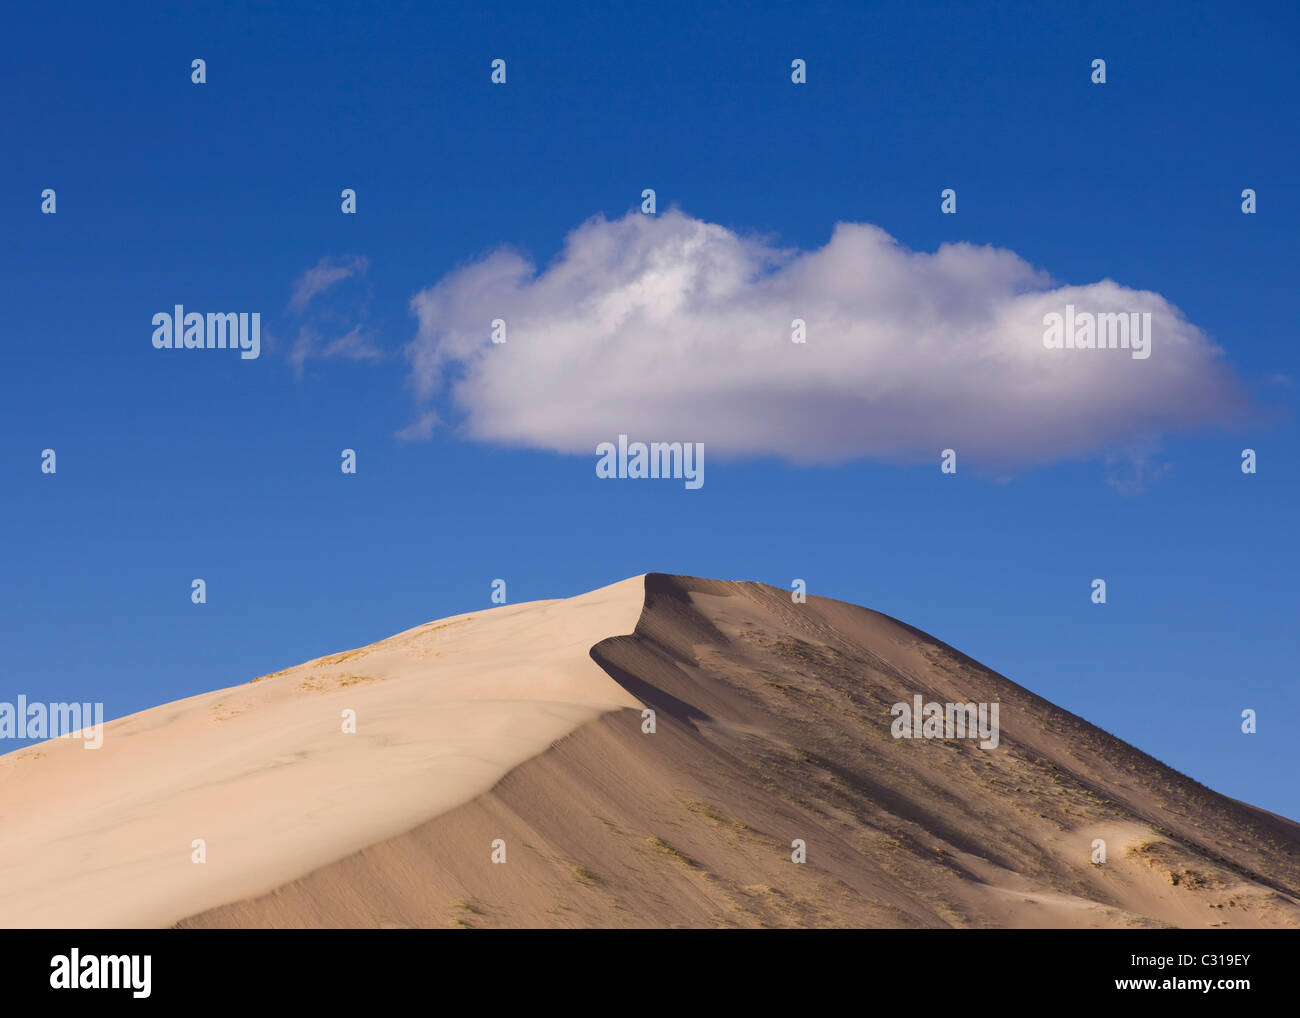 Il cloud su desert dune di sabbia - Kelso dune, Deserto Mojave, California USA Foto Stock